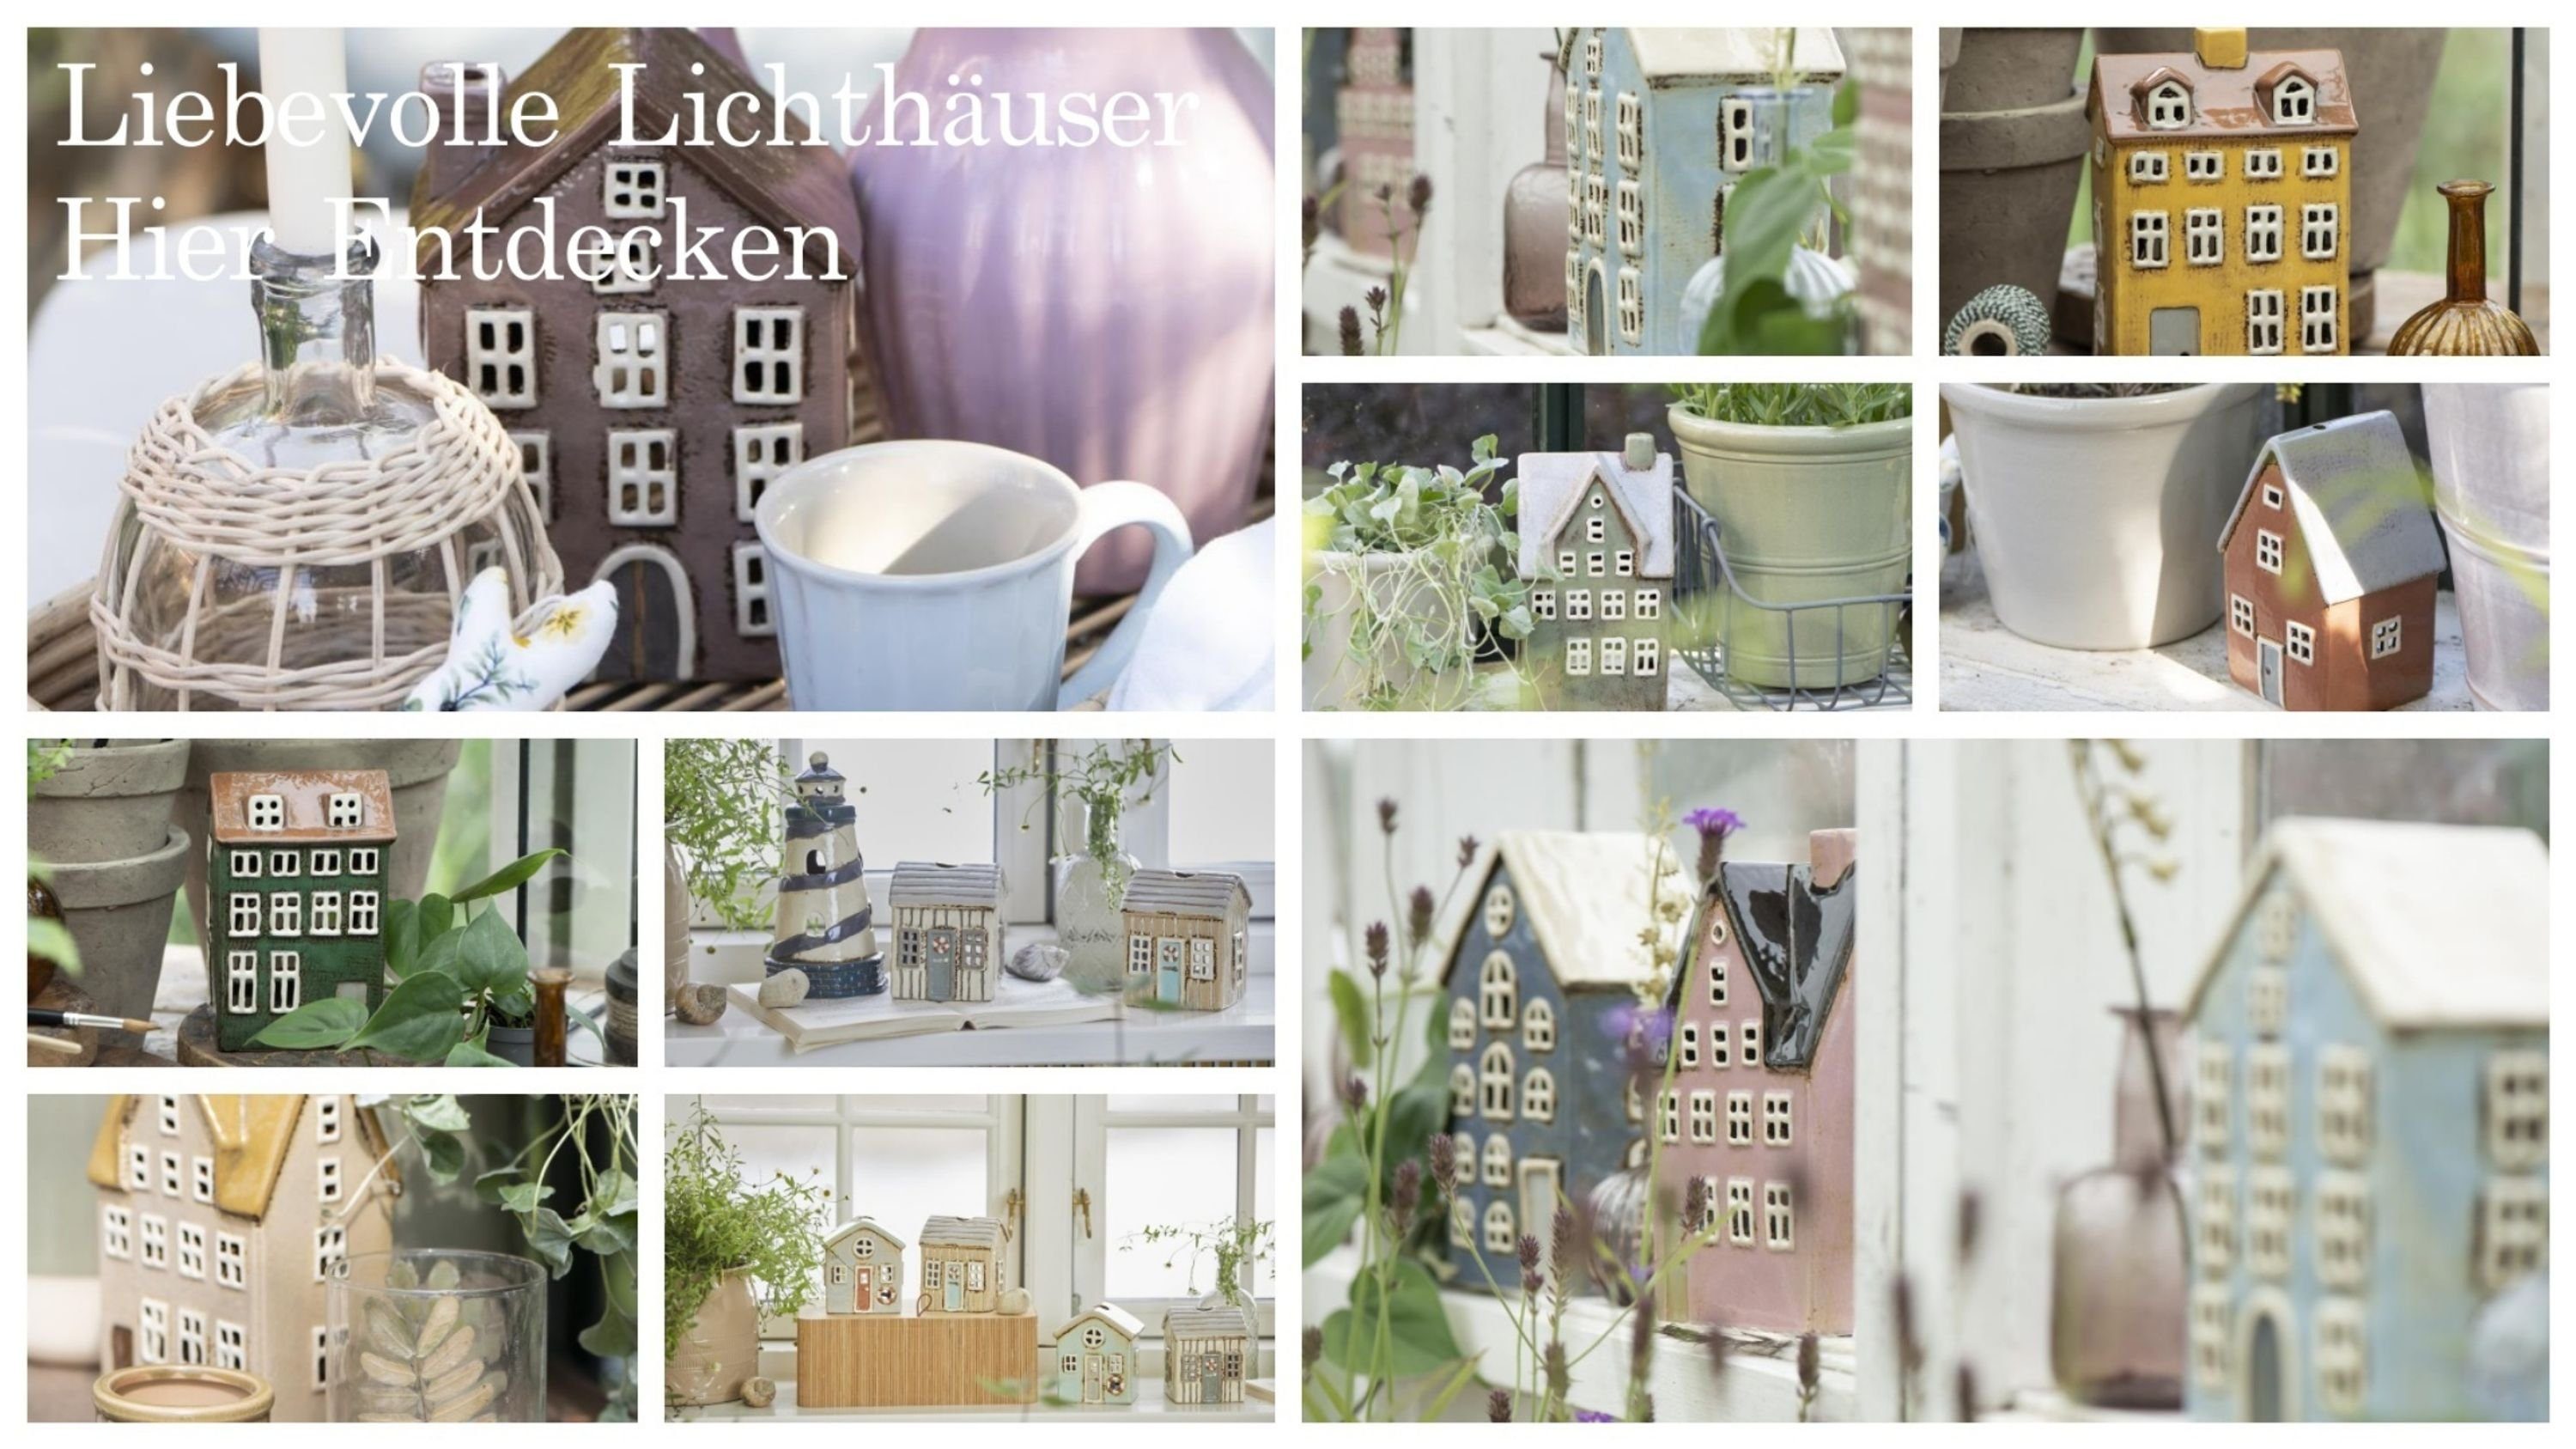 Laursen Modell Teelichthaus Ib skandinavischen Kandelaber, Ringsted im Stil.